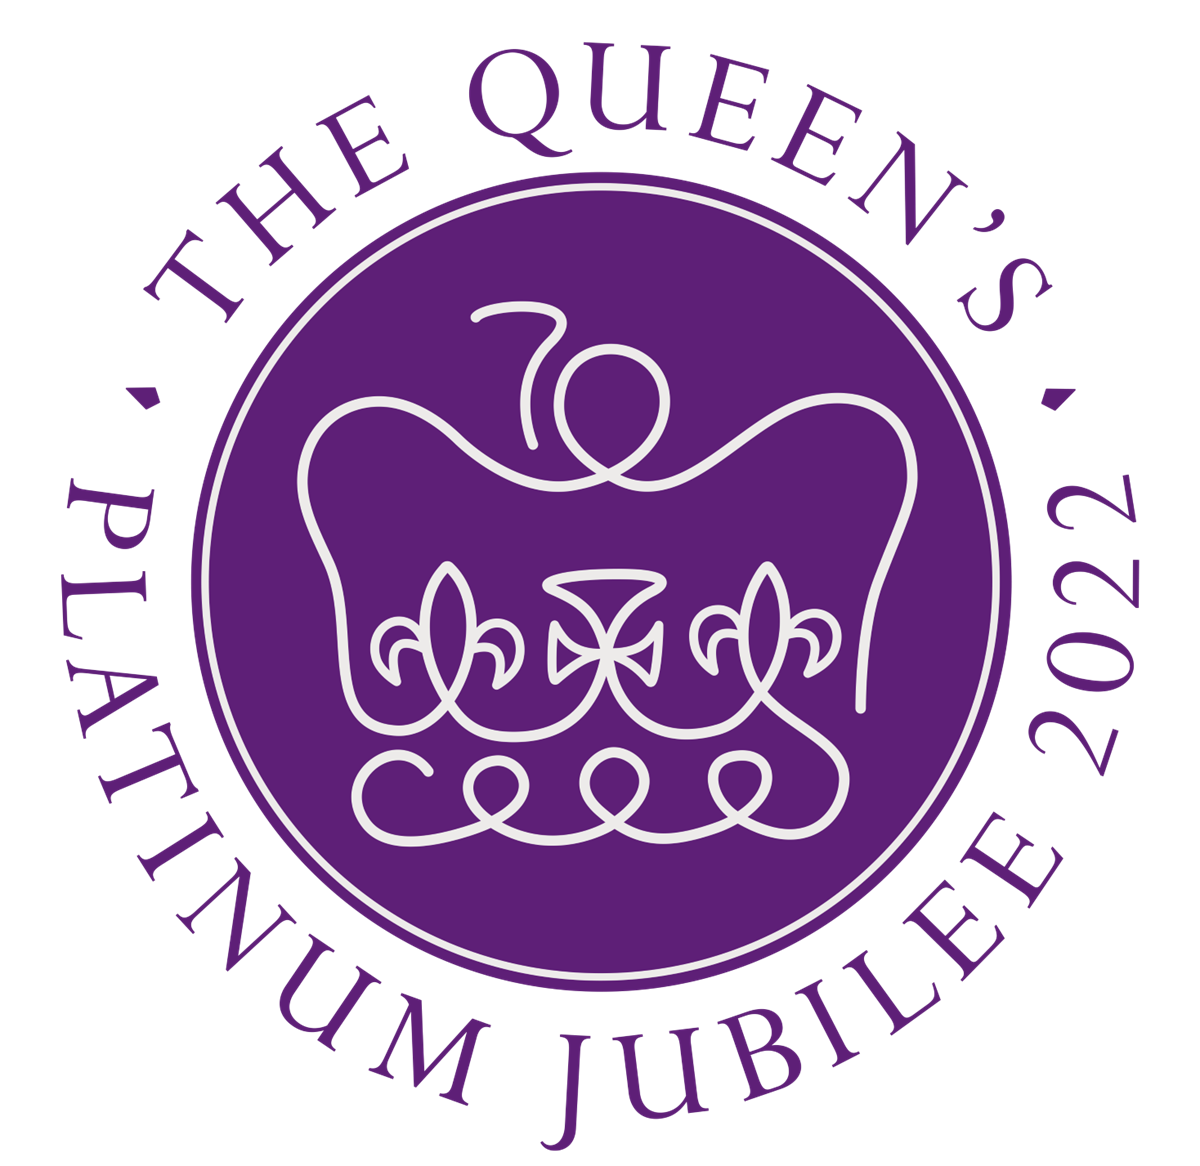 Queen's Plaitnum Jubilee Emblam 